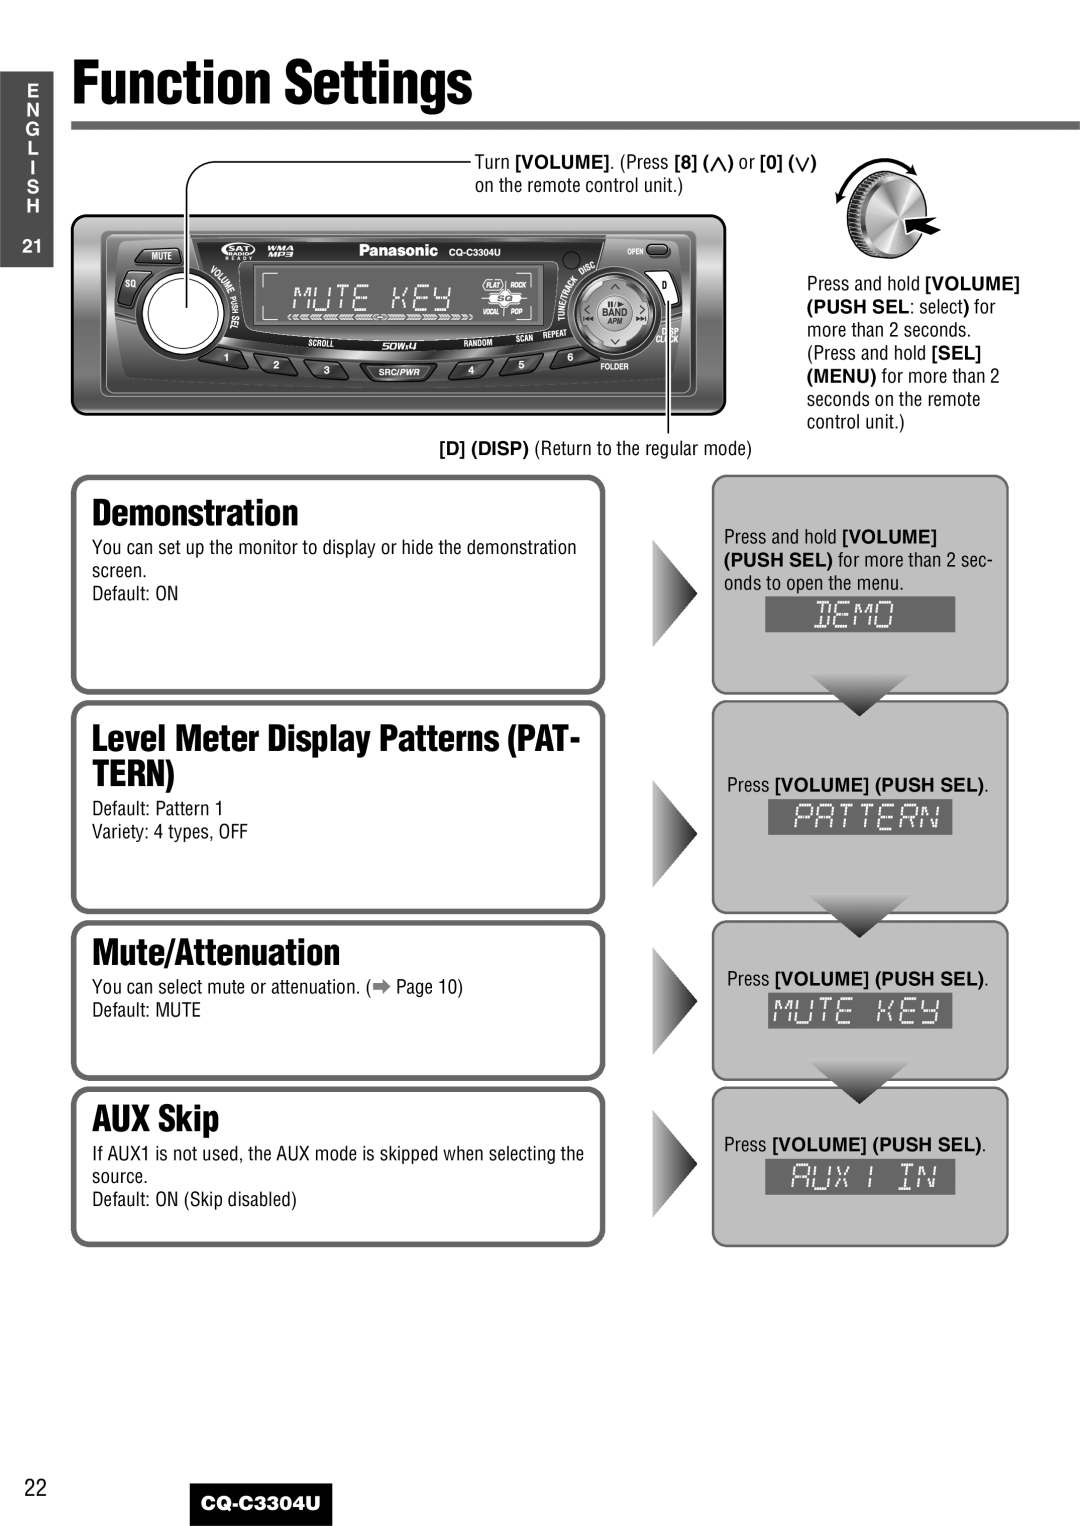 Panasonic CQ-C3304U Function Settings, Demonstration, Level Meter Display Patterns PAT- TERN, AUX Skip, Mute/Attenuation 